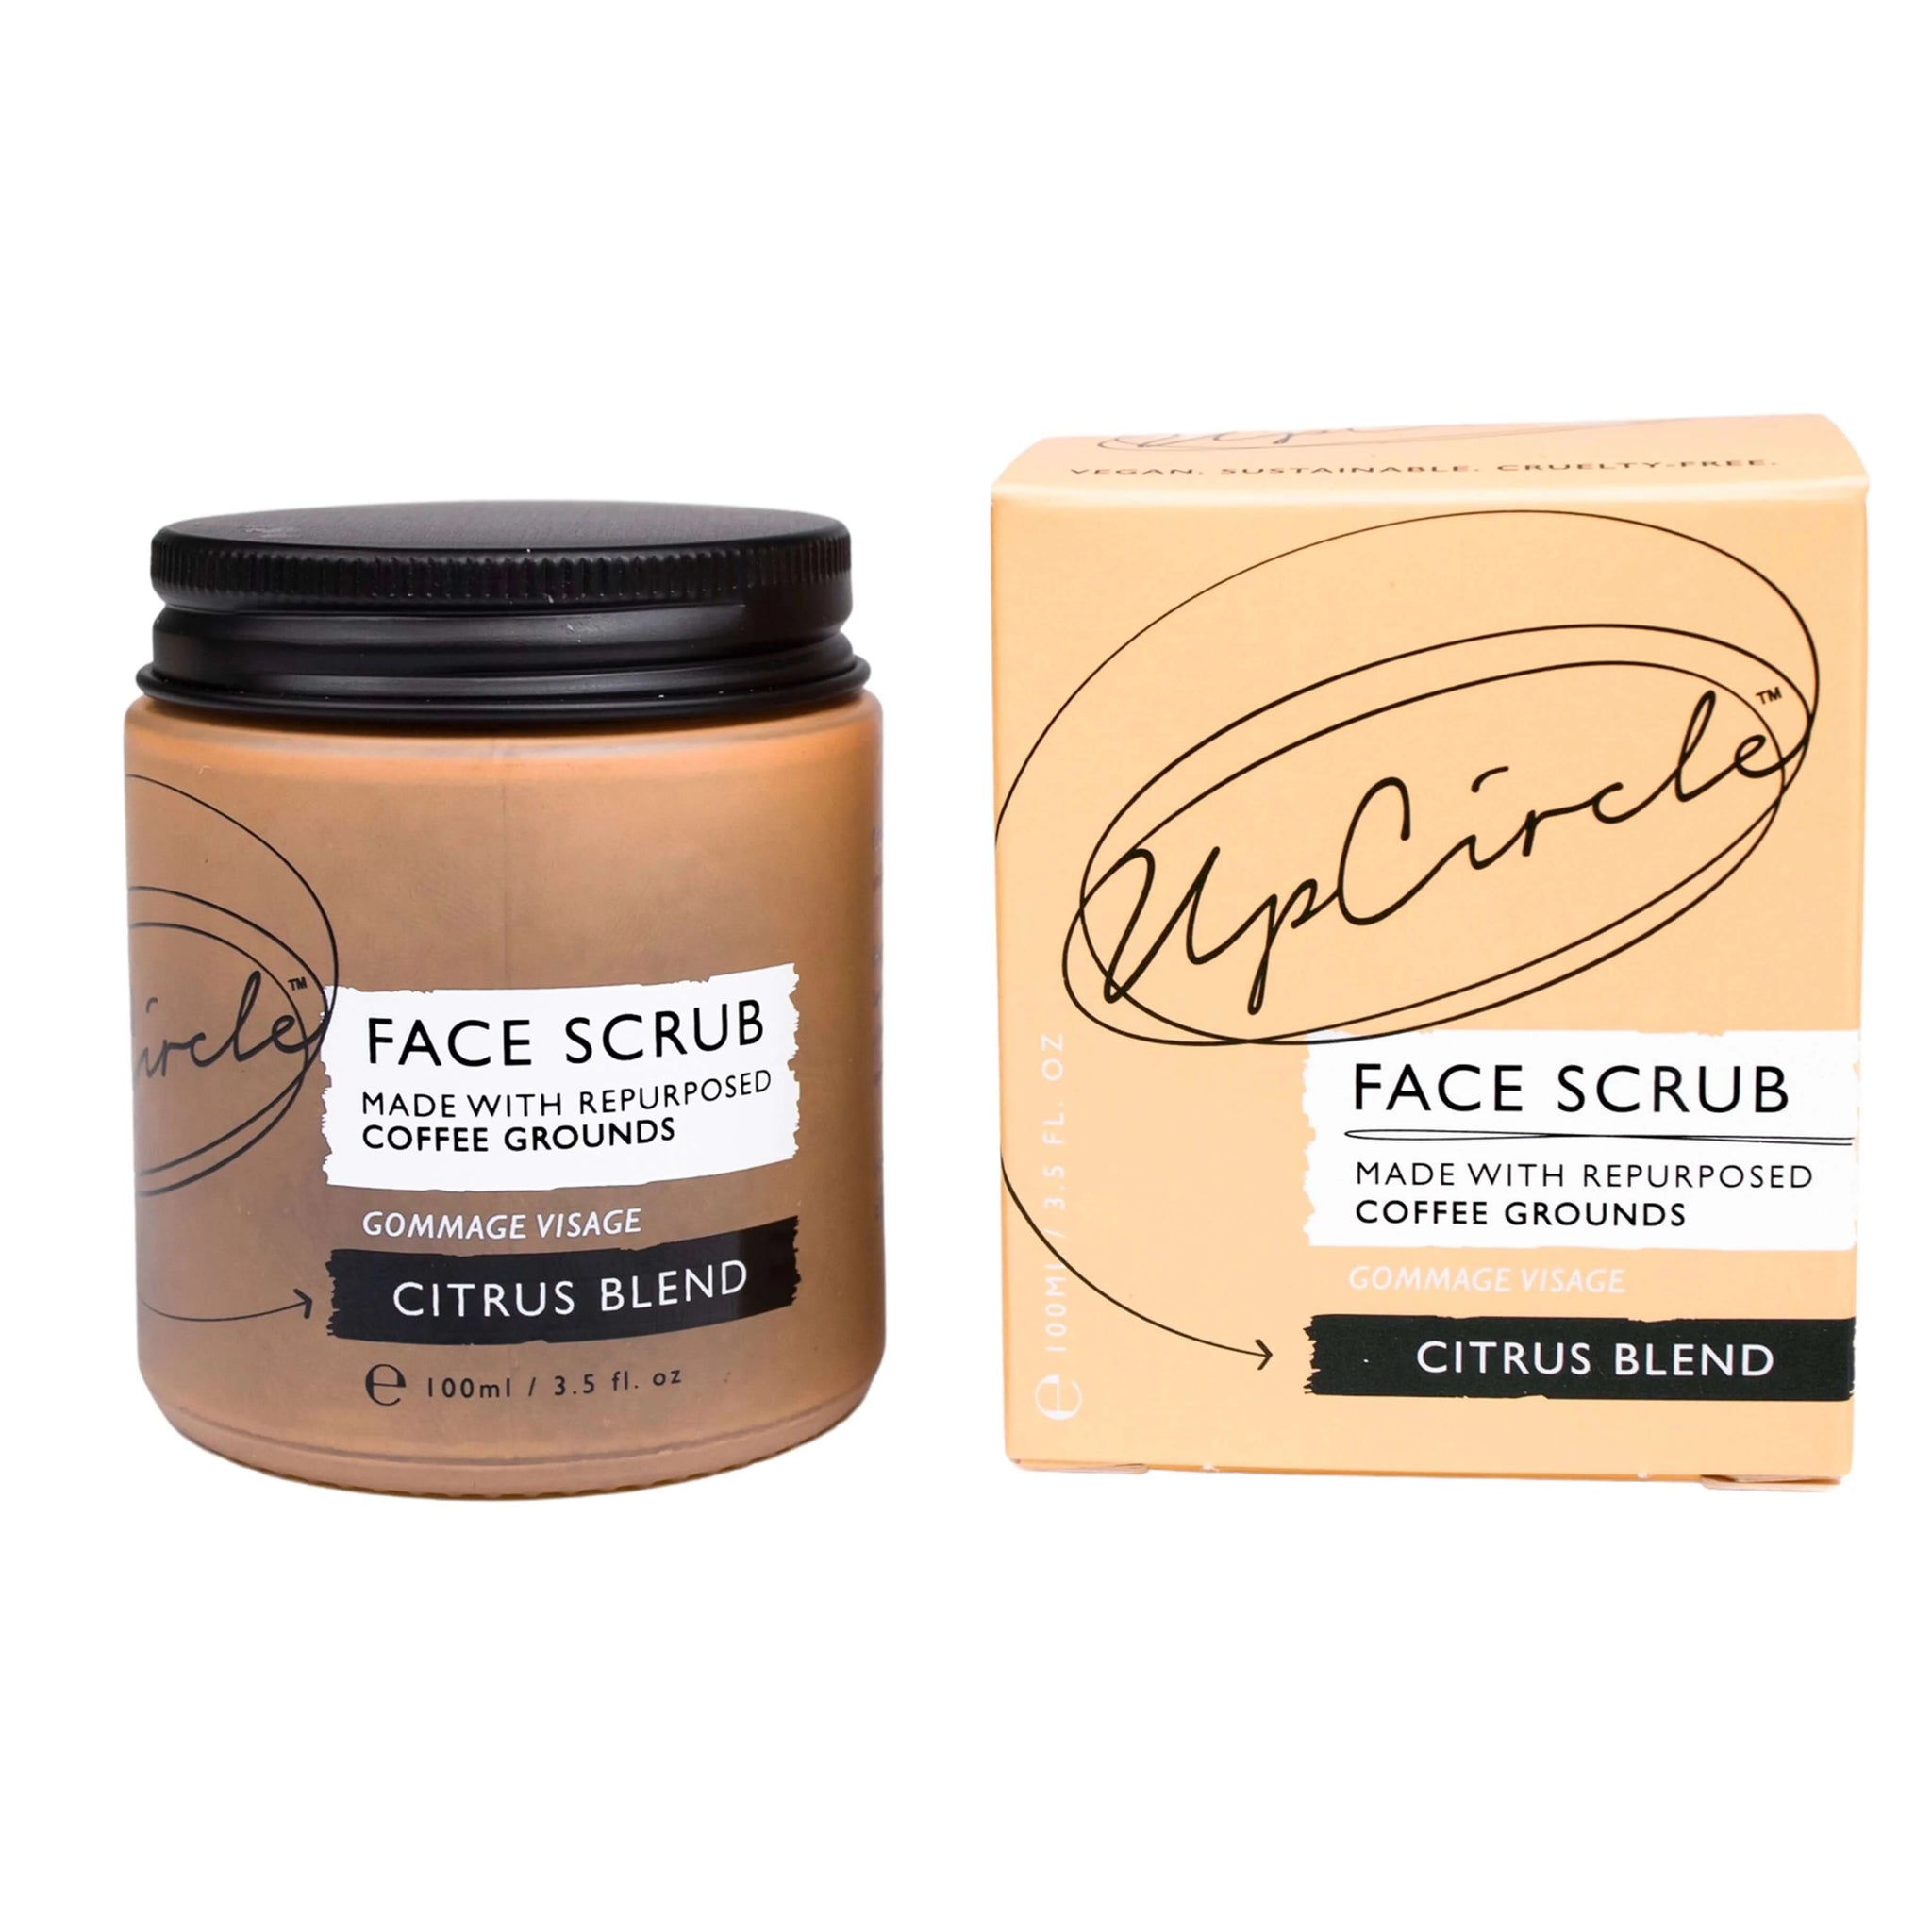 UpCircle Natural Face Scrub - Citrus